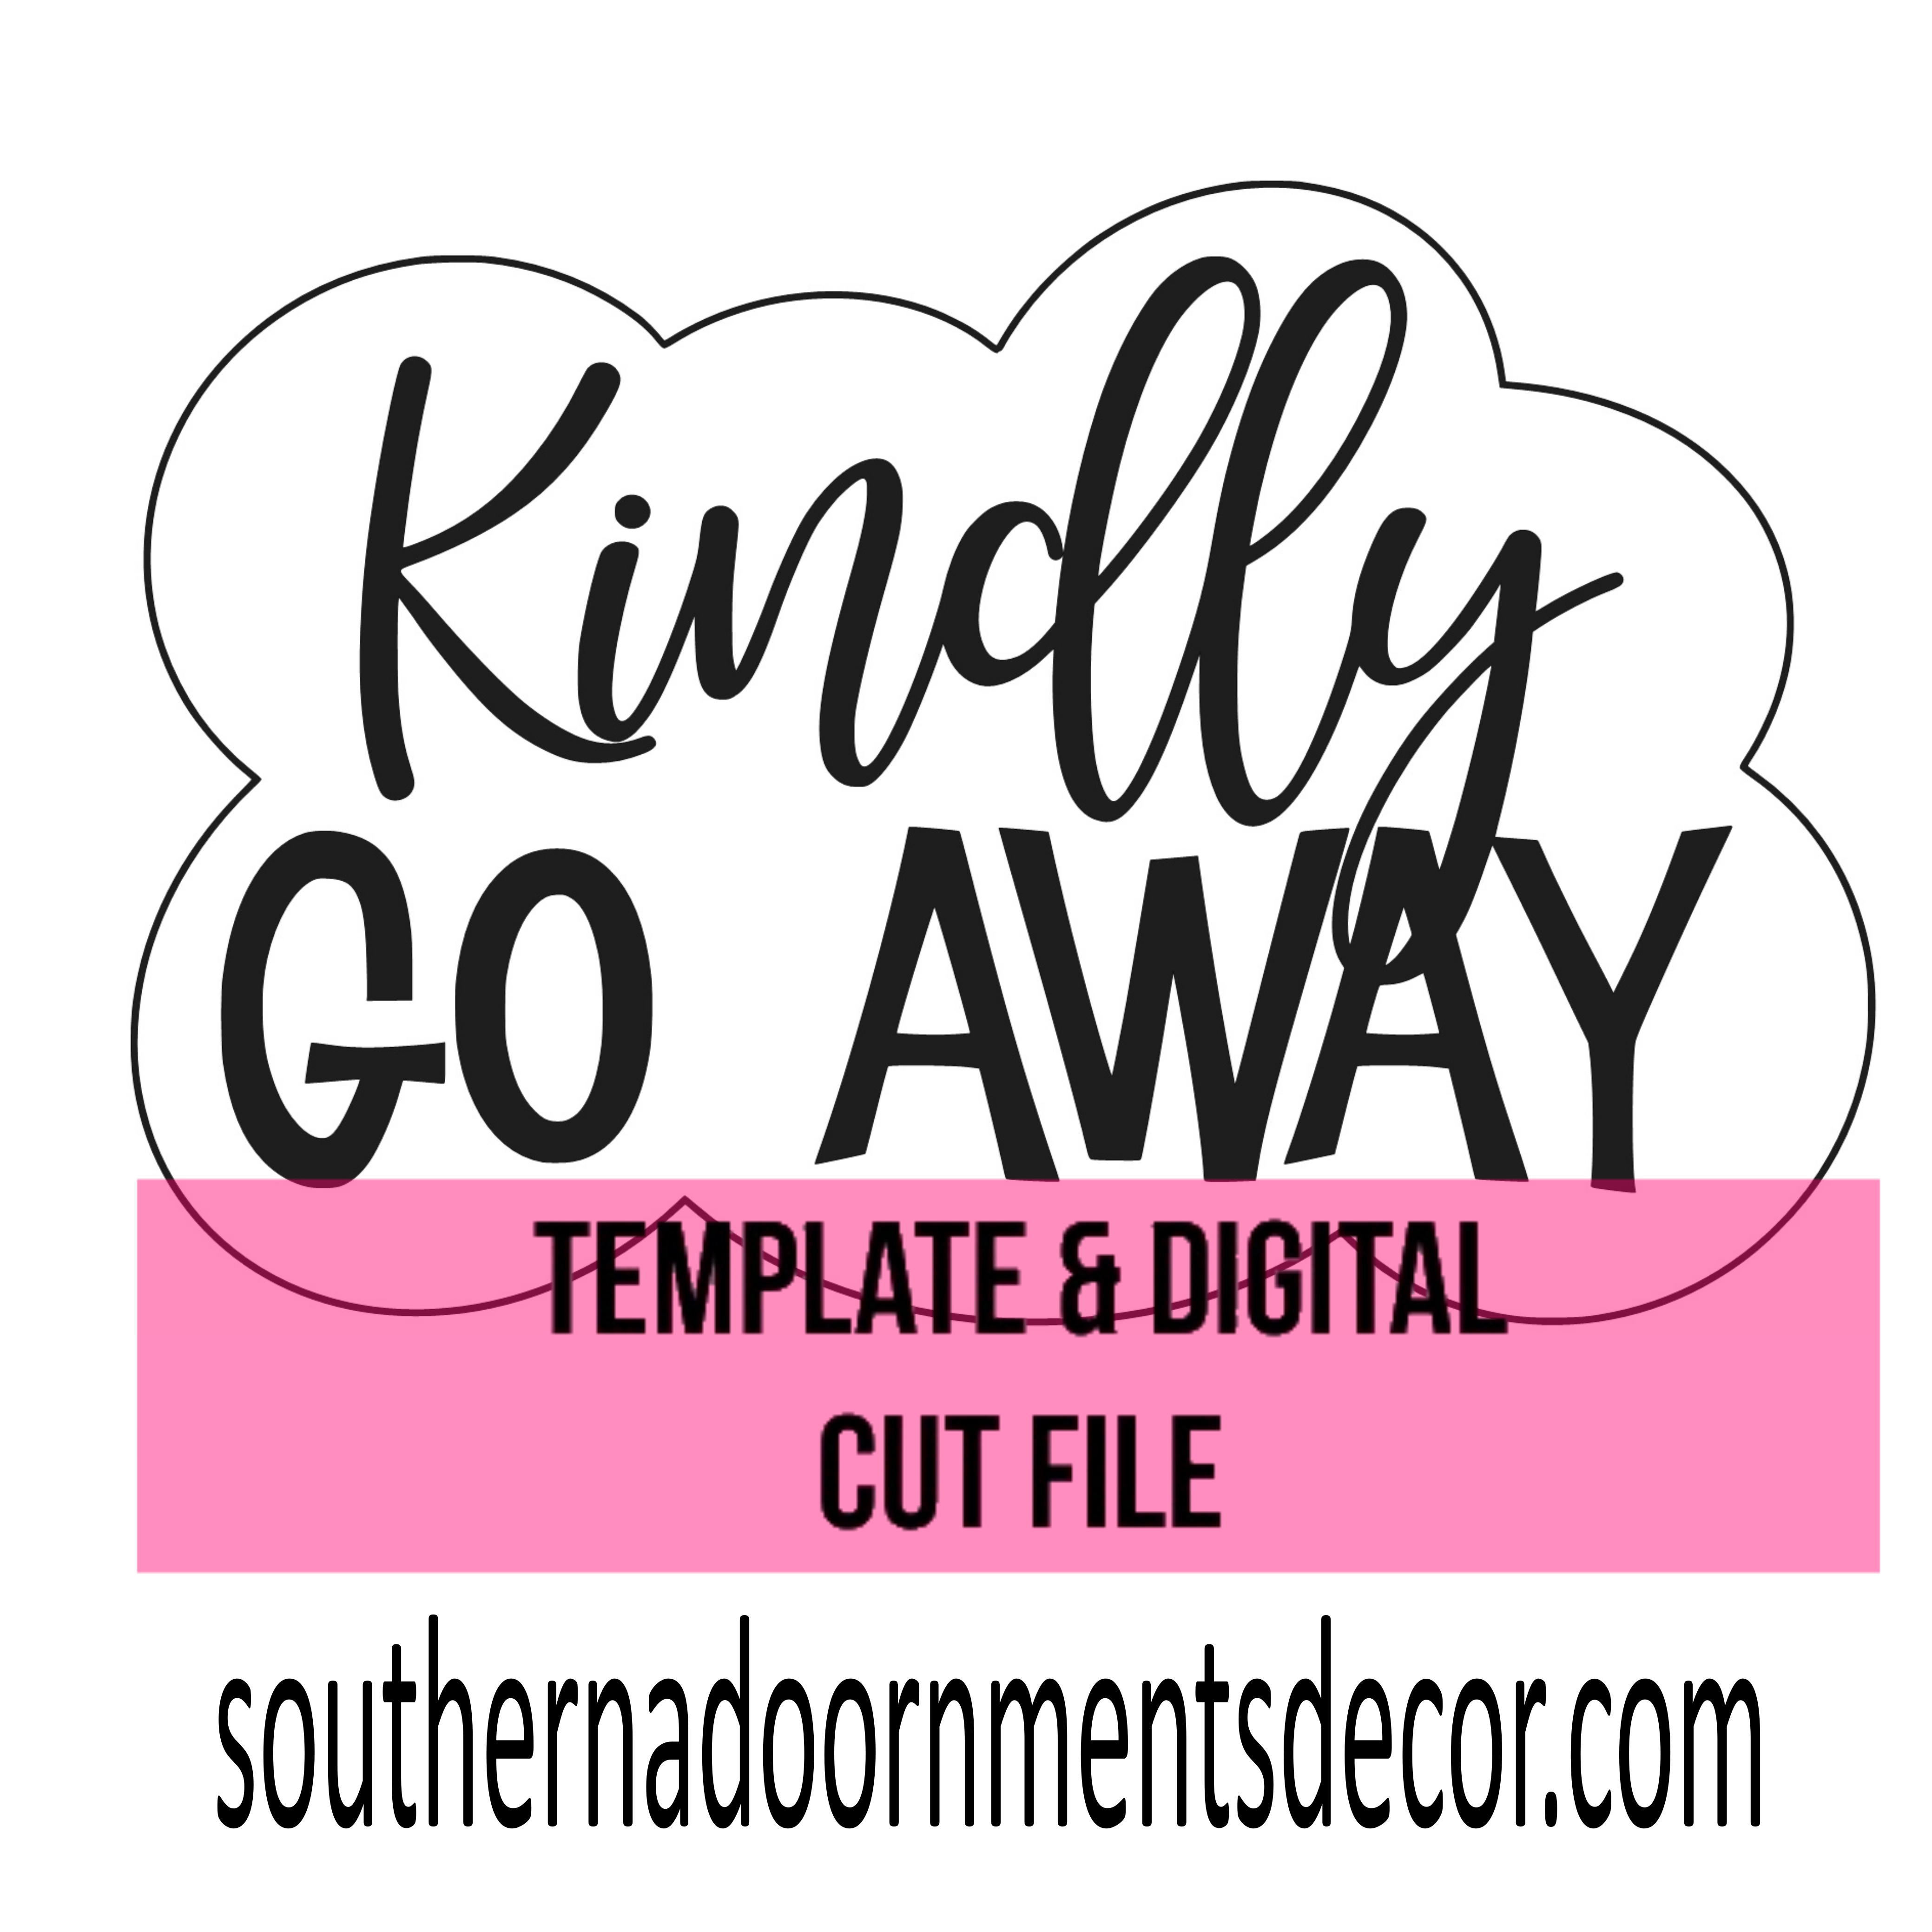 Kindly GO AWAY Template & Digital Cut File